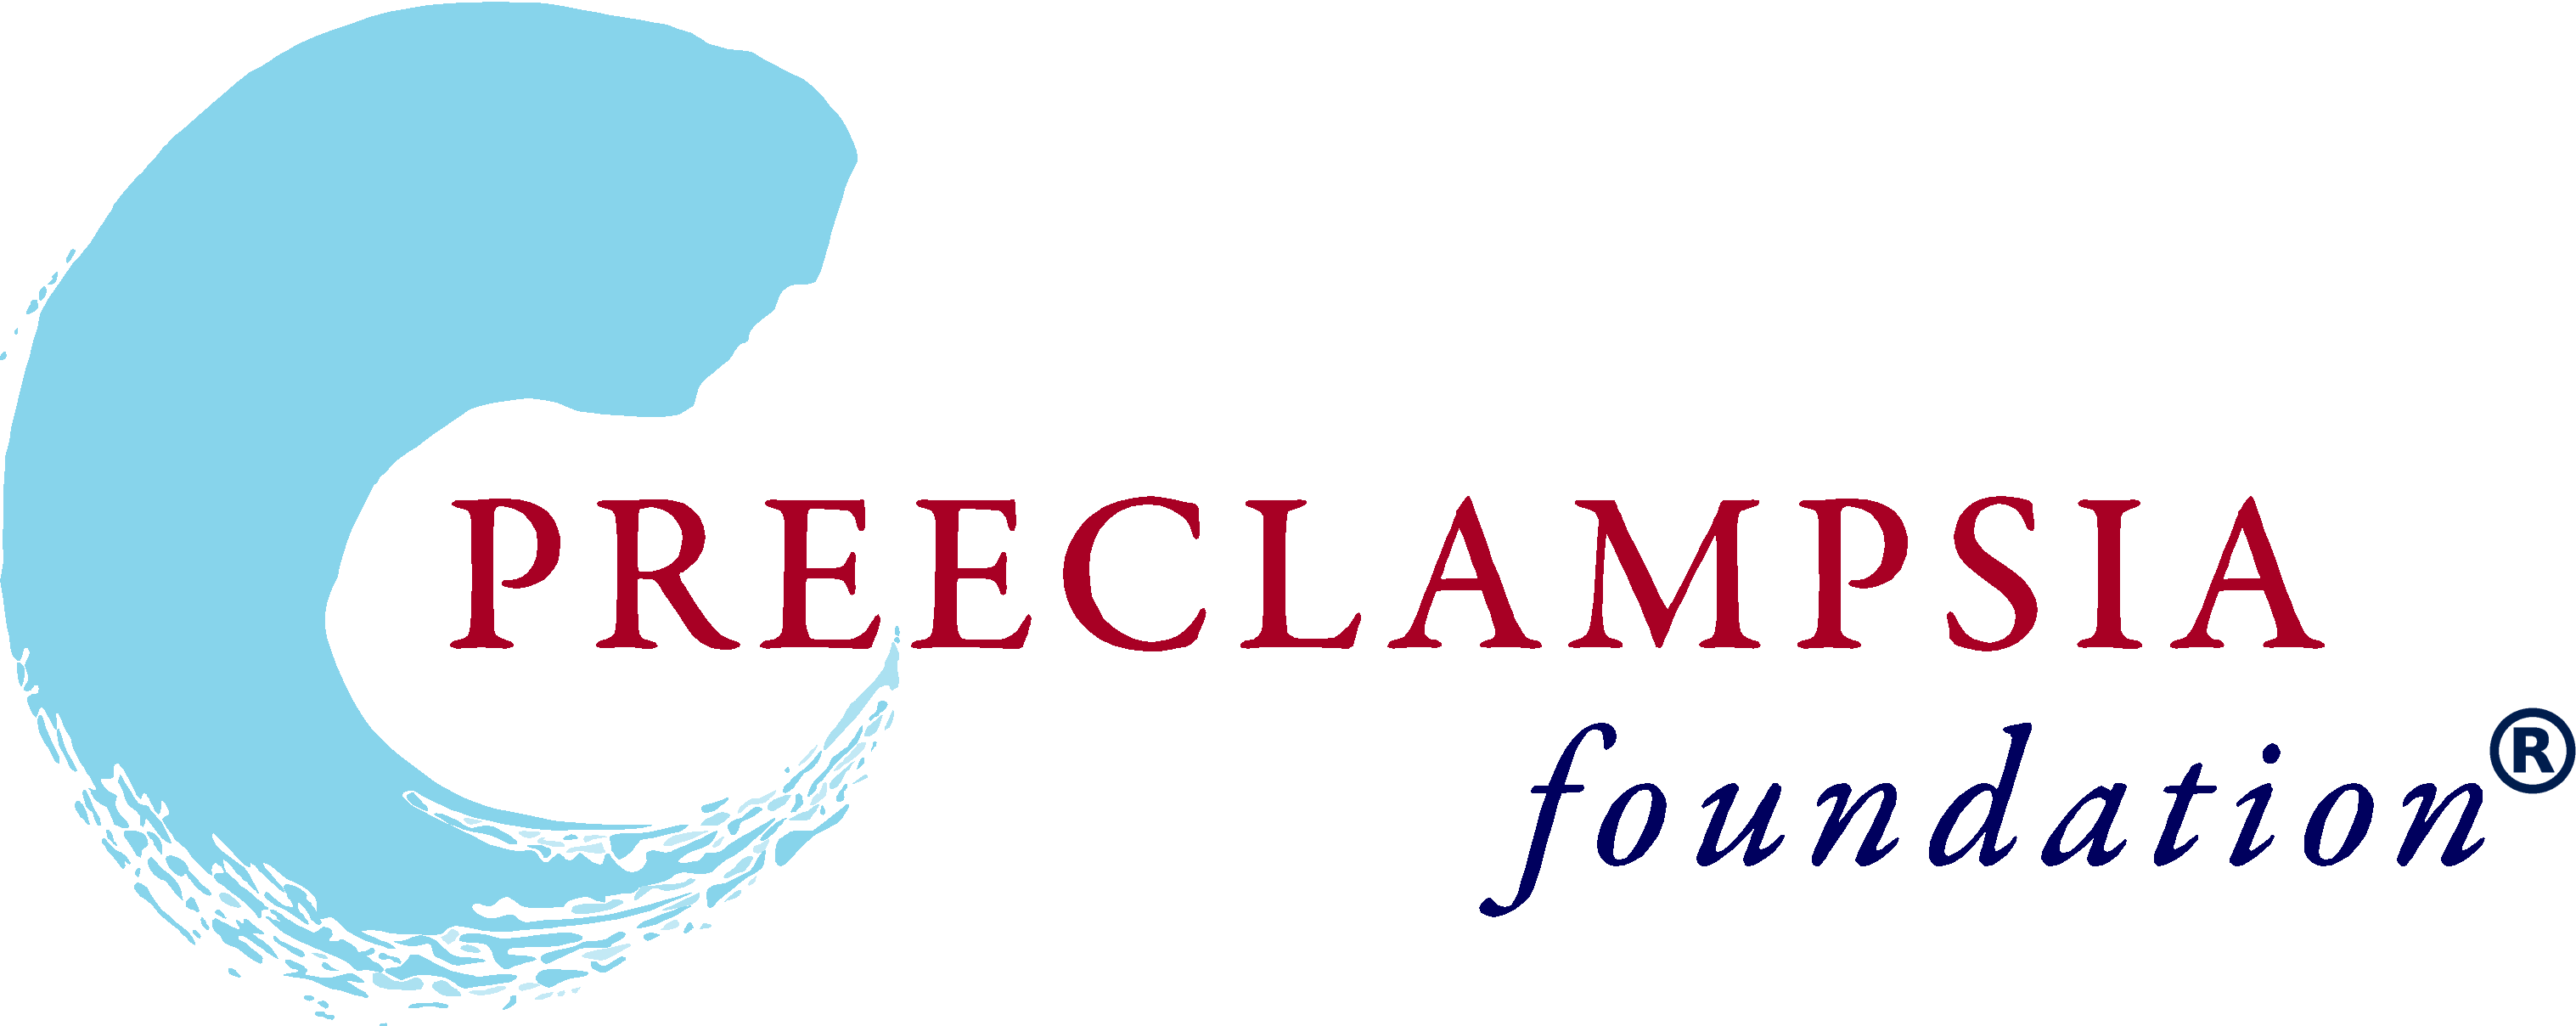 preeclampsia foundation logo